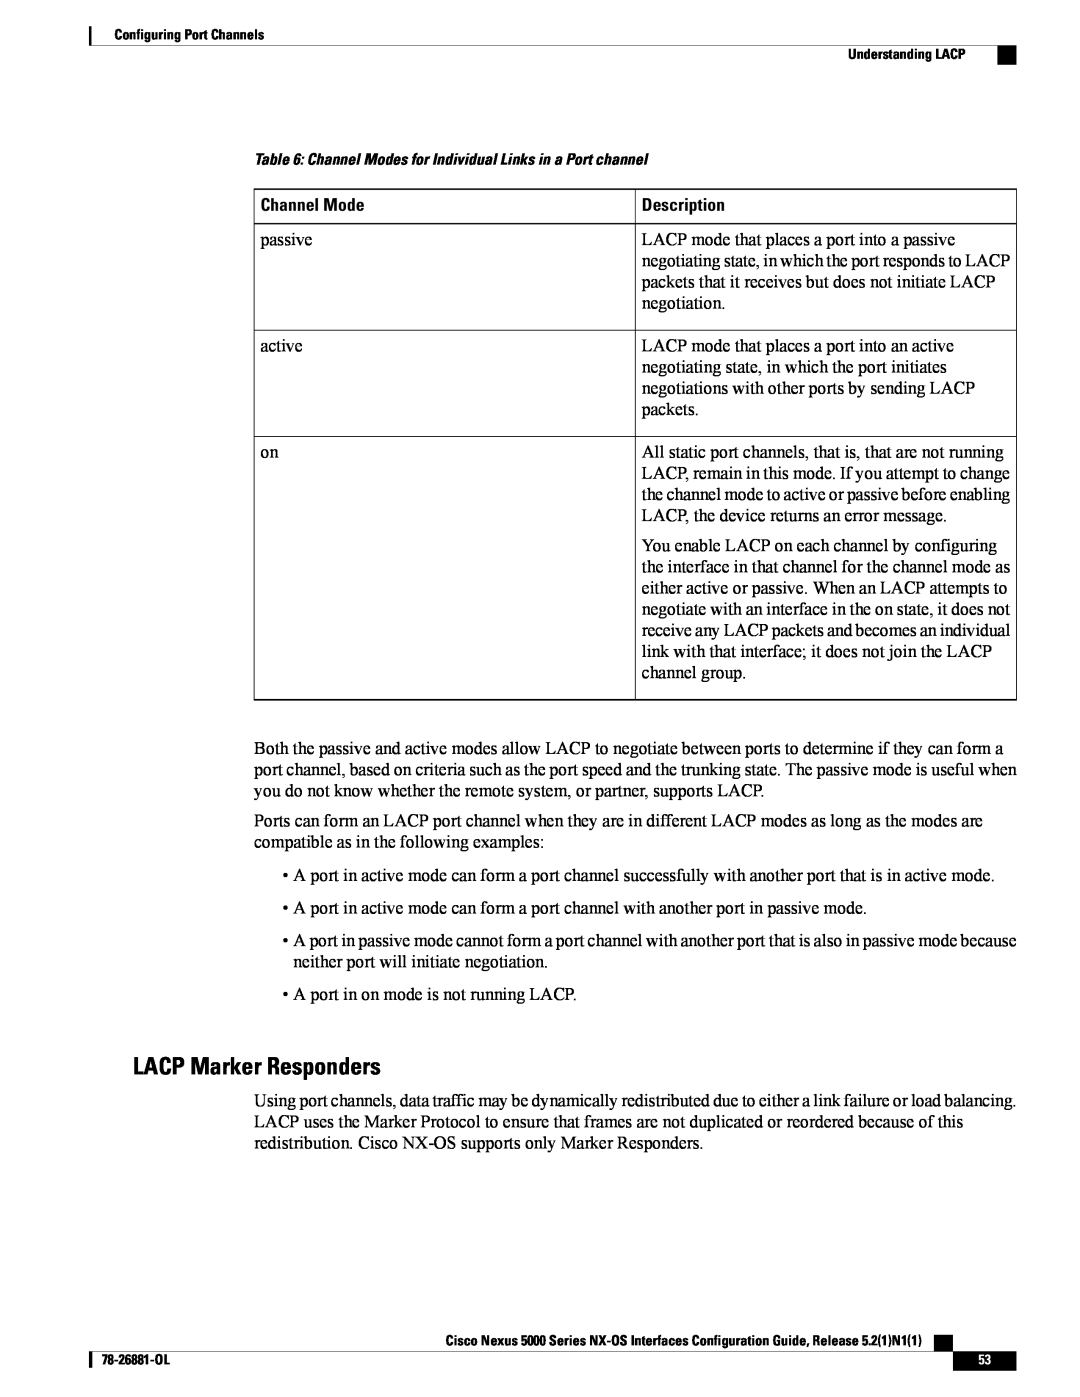 Cisco Systems N5KC5596TFA manual LACP Marker Responders 